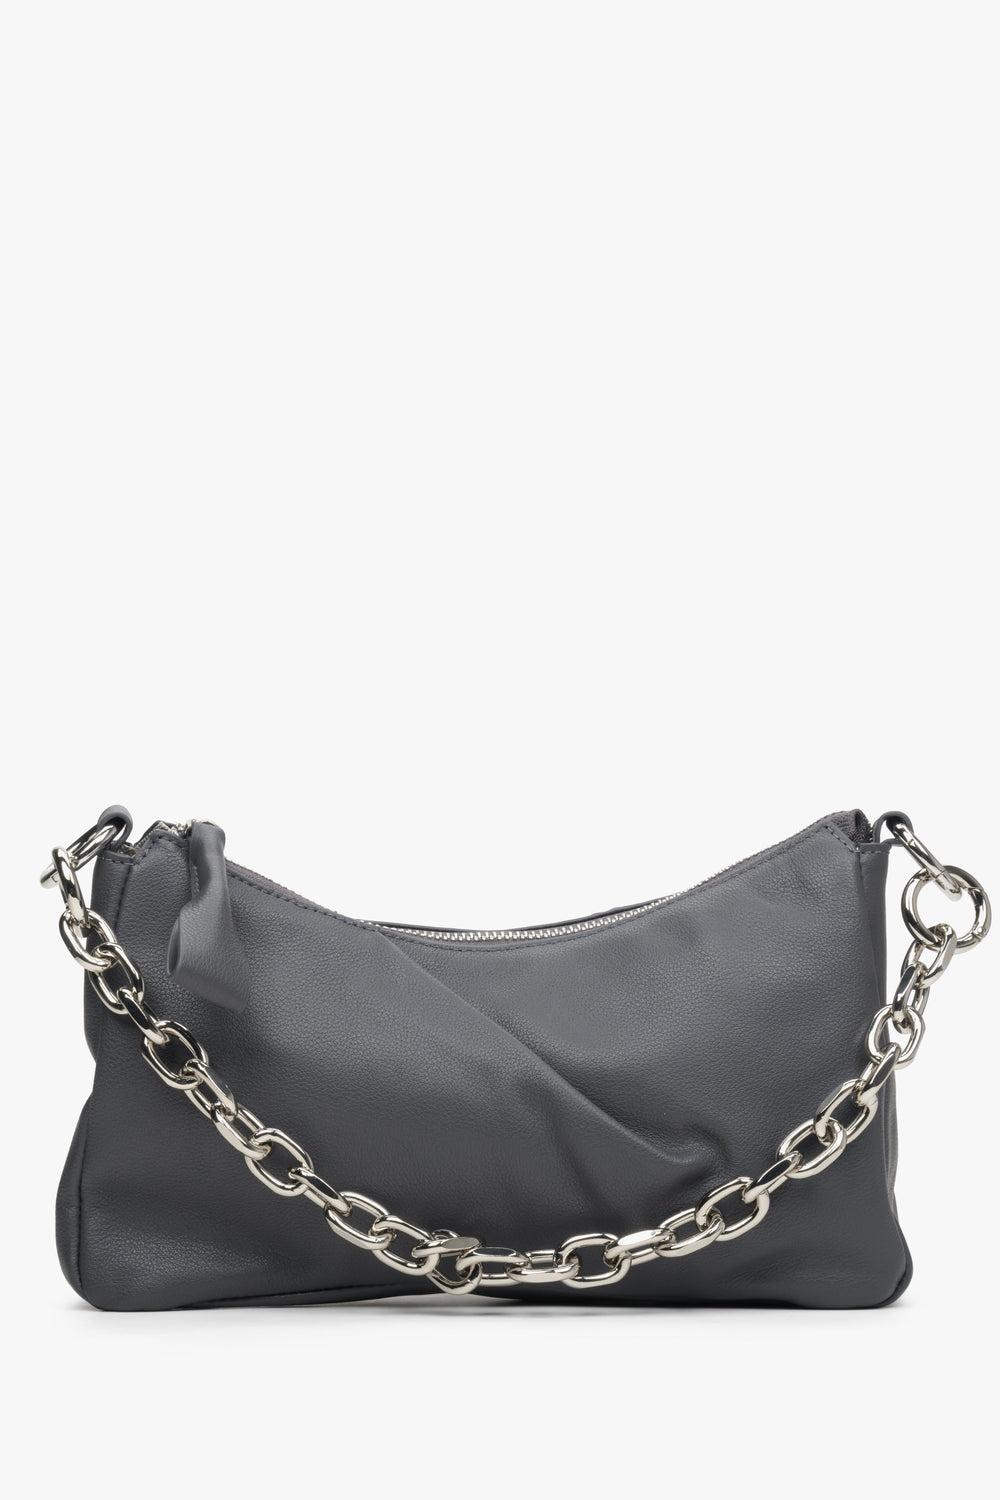 Women's Grey Chain Strap Shoulder Bag made of Genuine Leather Estro ER00113721.